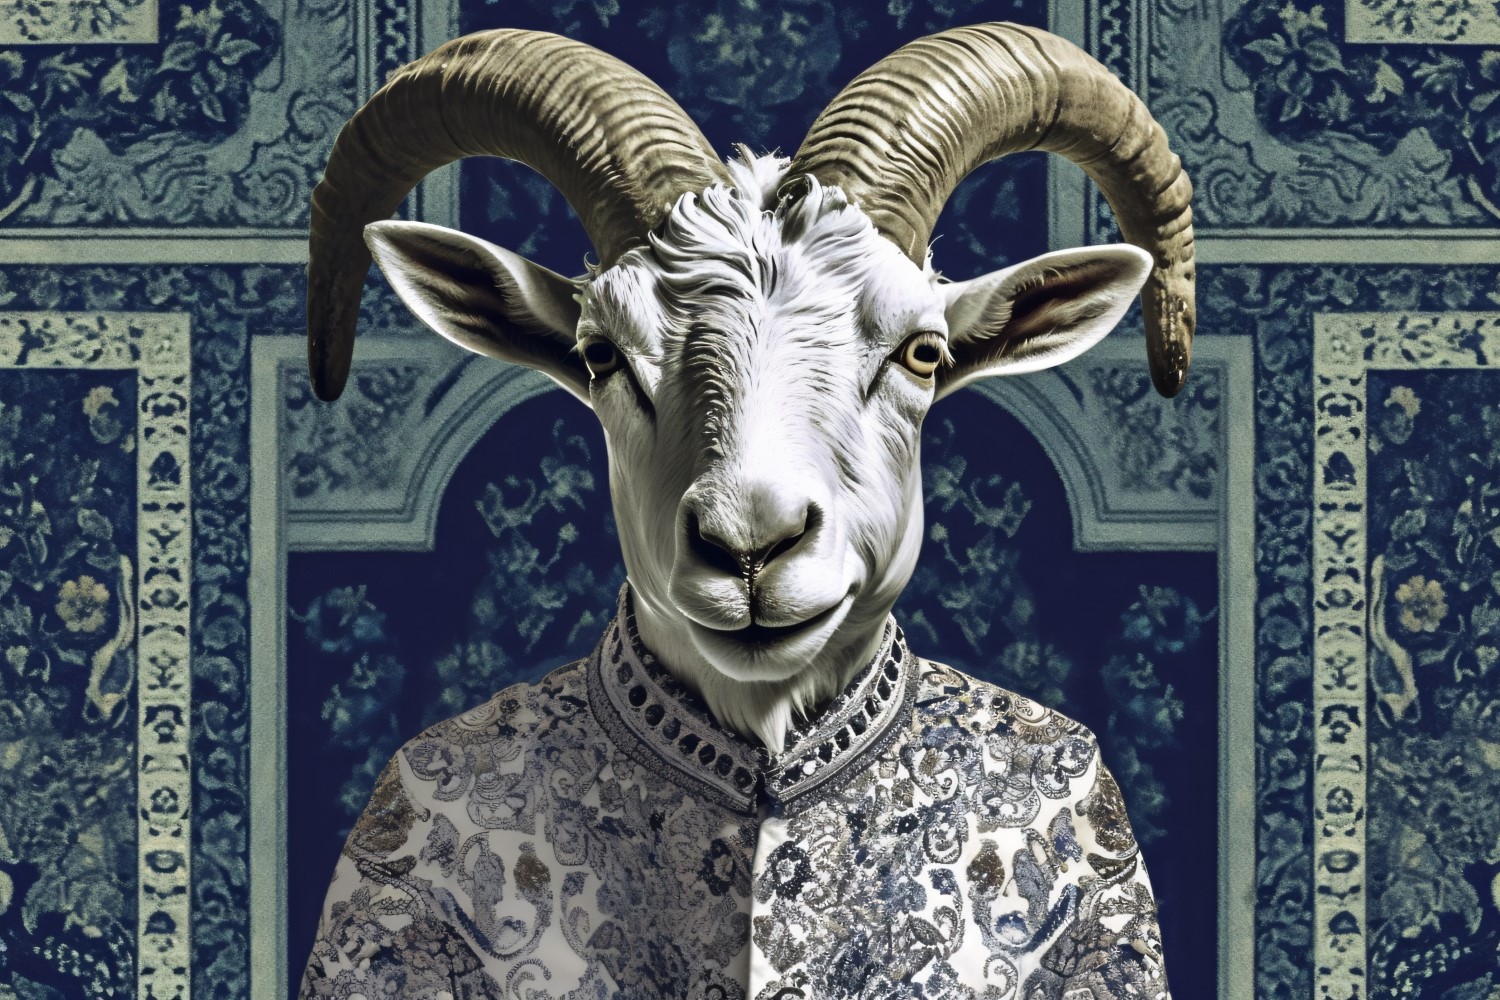 Eid ul adha design with happy goat illustration 01